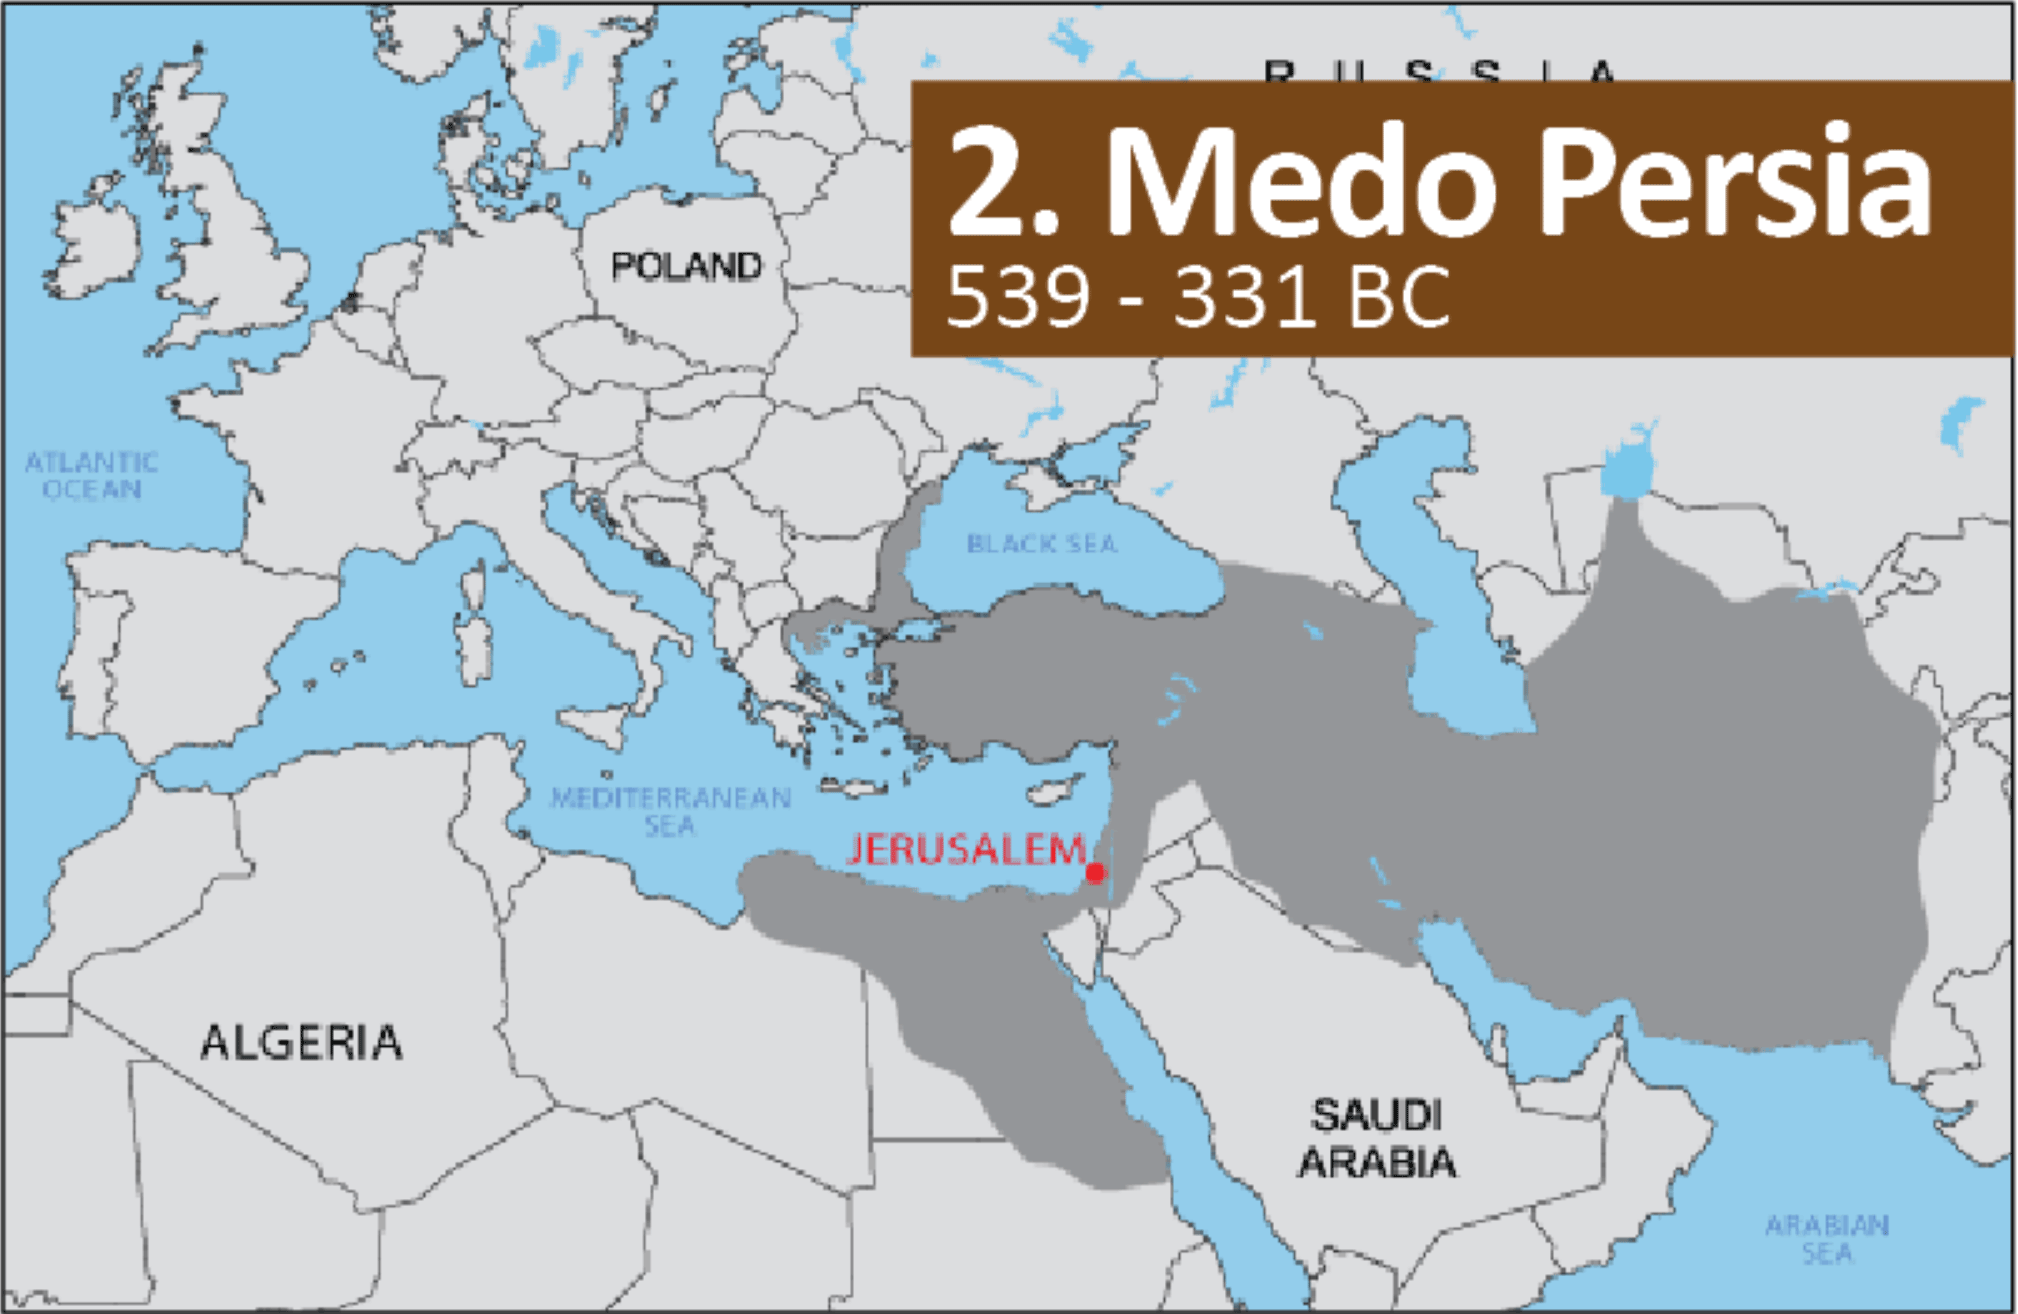 Medo-Persia Map